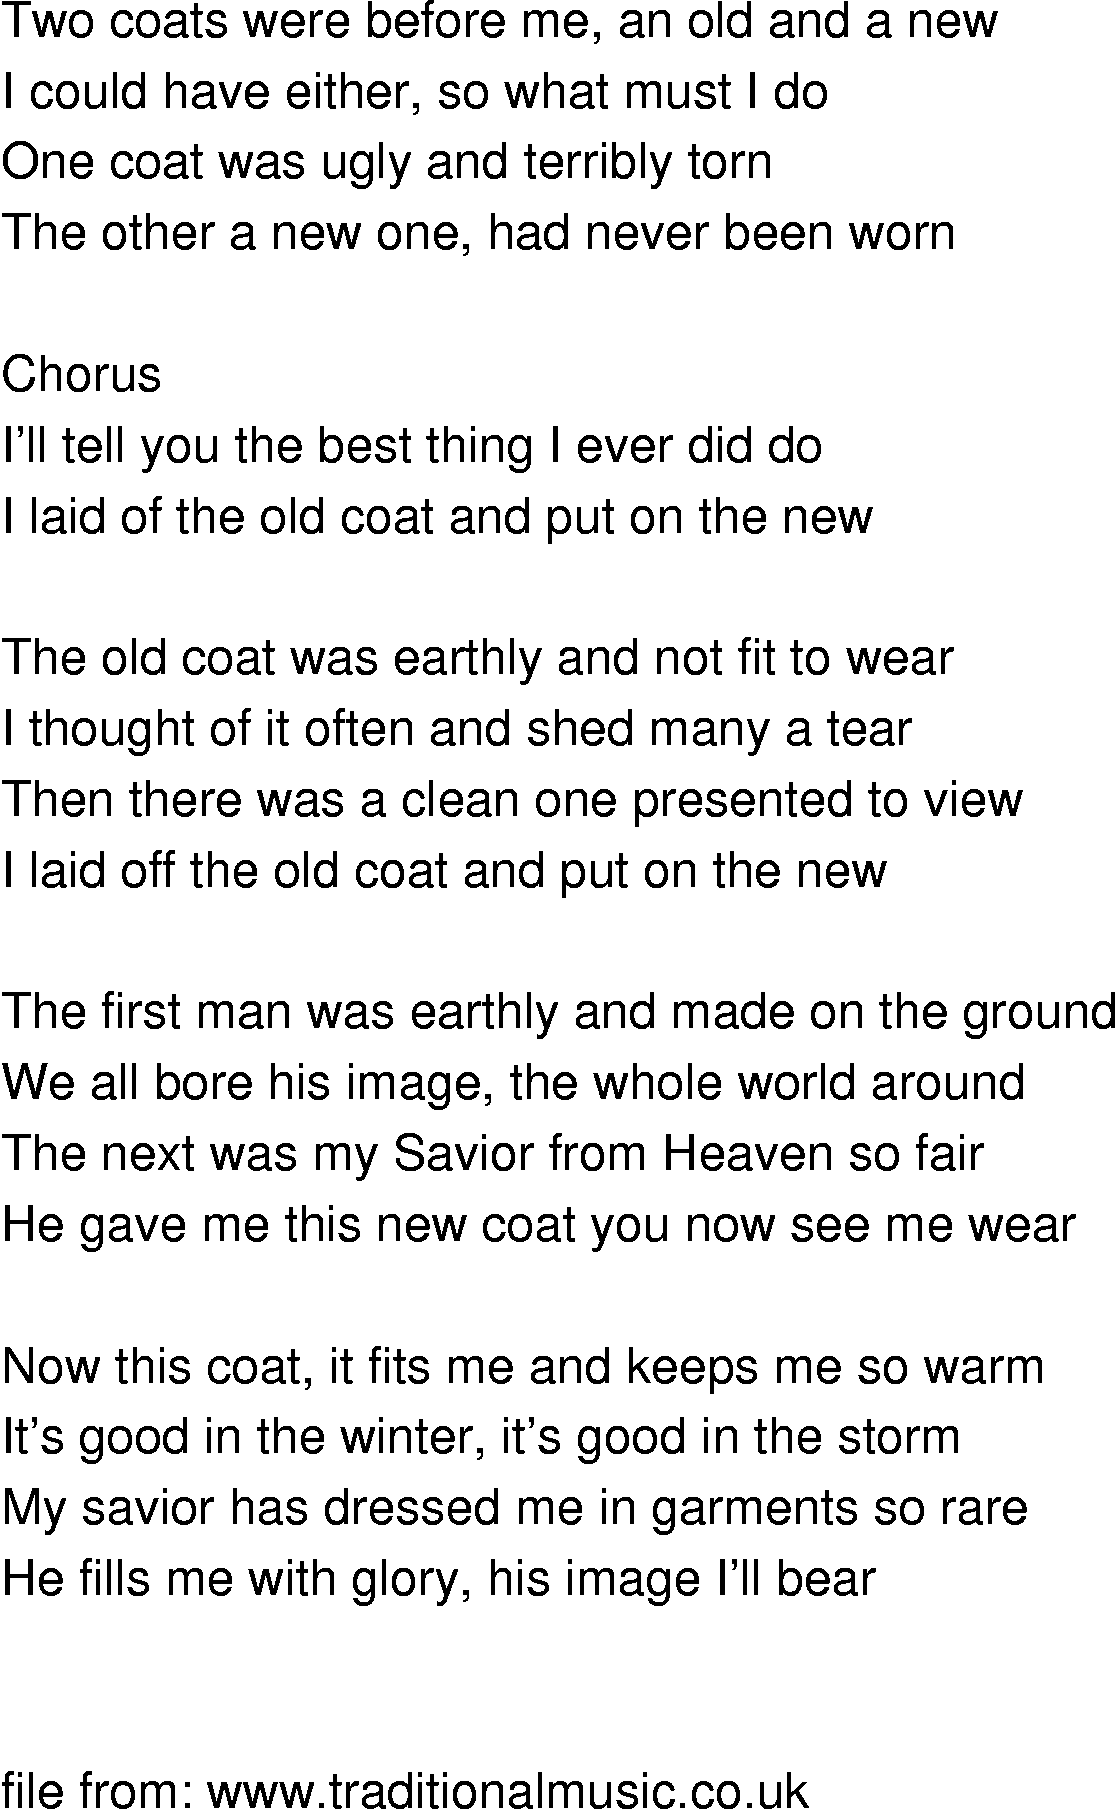 Old-Time (oldtimey) Song Lyrics - two coats